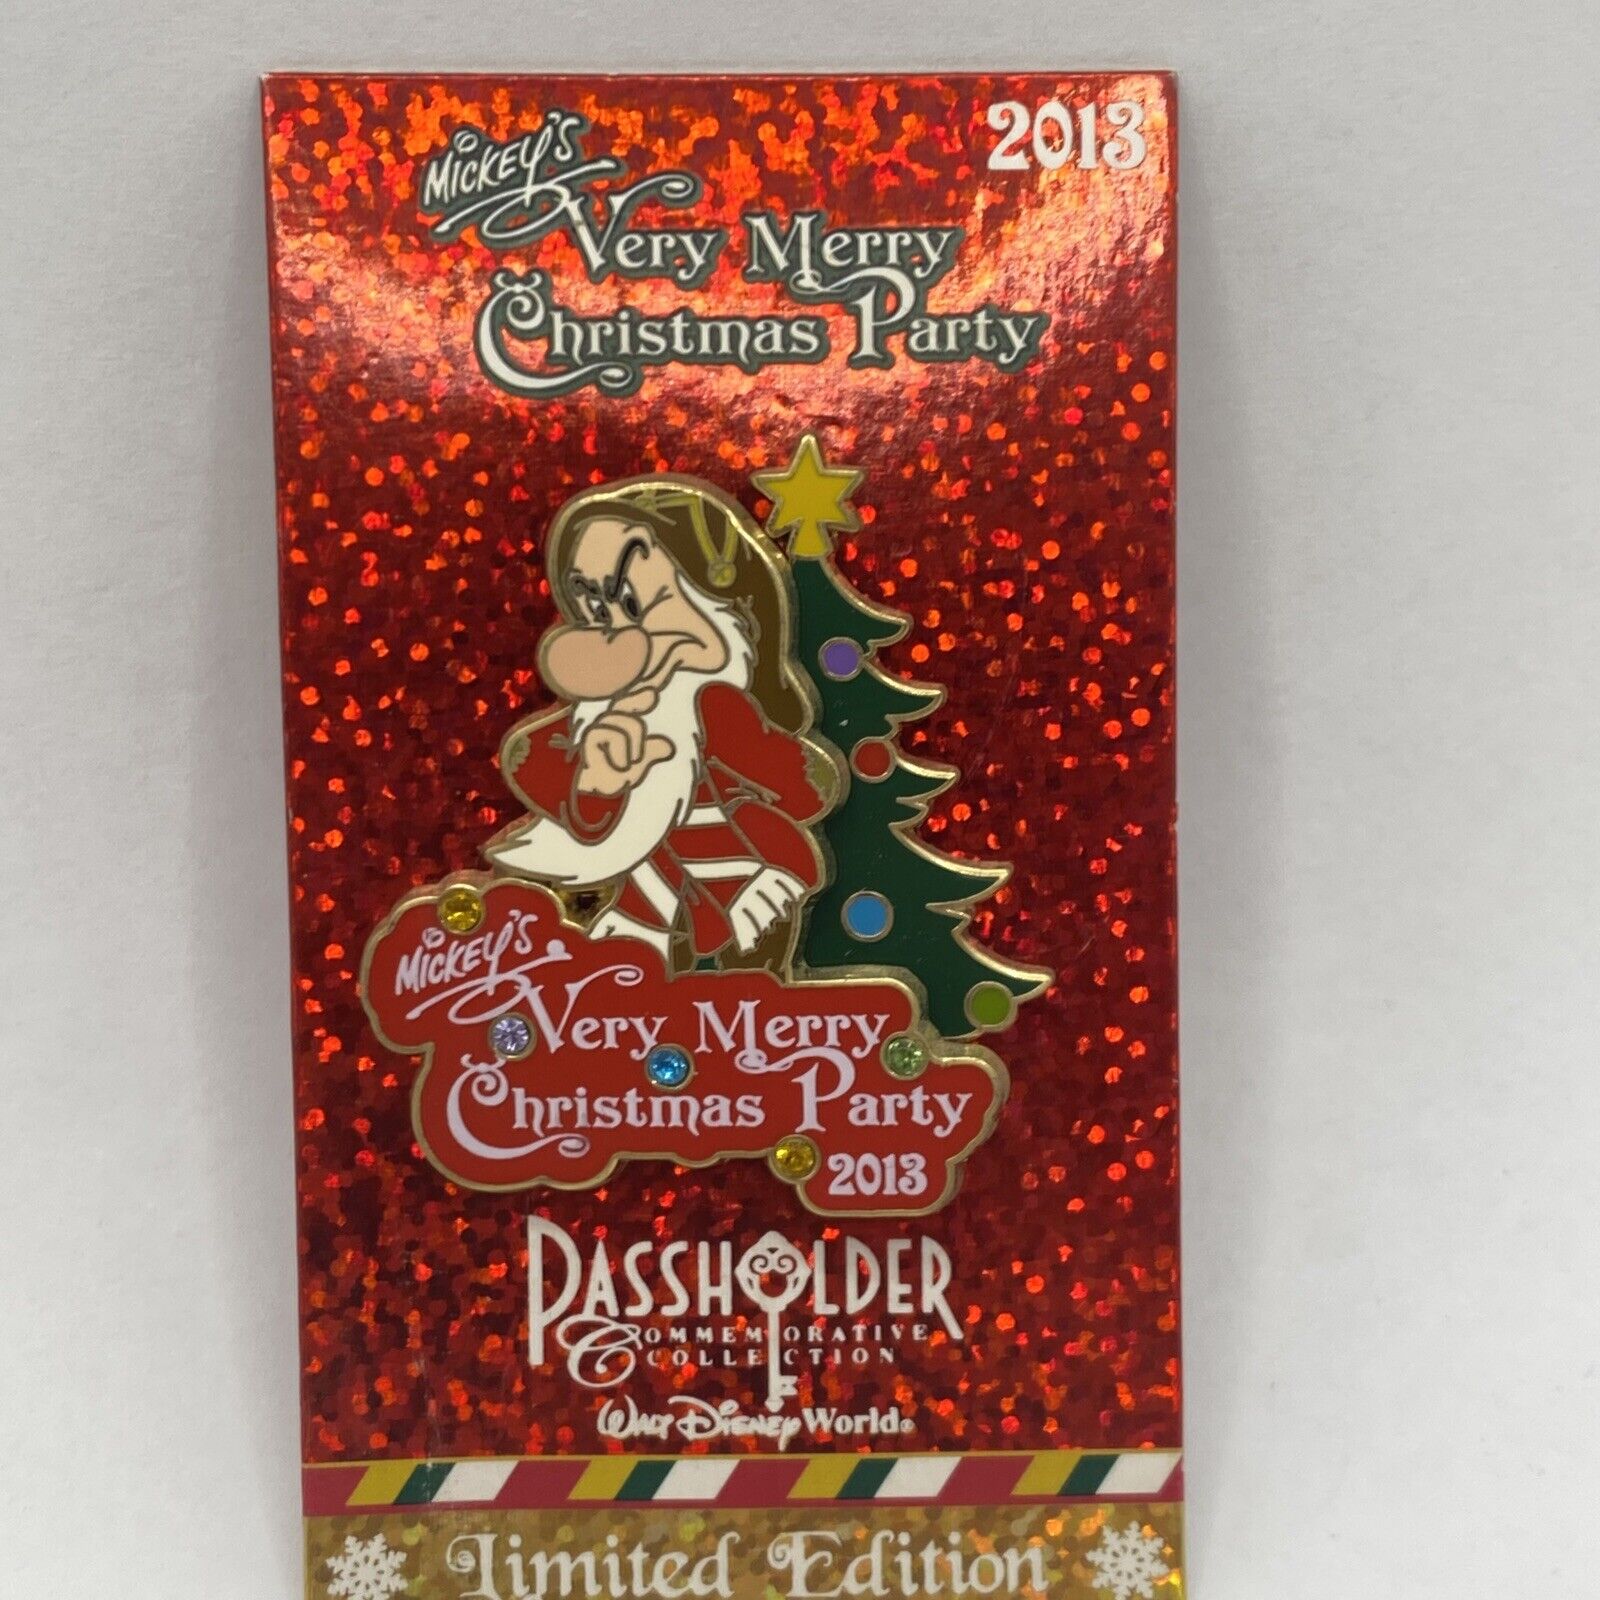 NEW 2013 Disney Pin Mickey's Very Merry Christmas Party Passholder Grumpy Pin